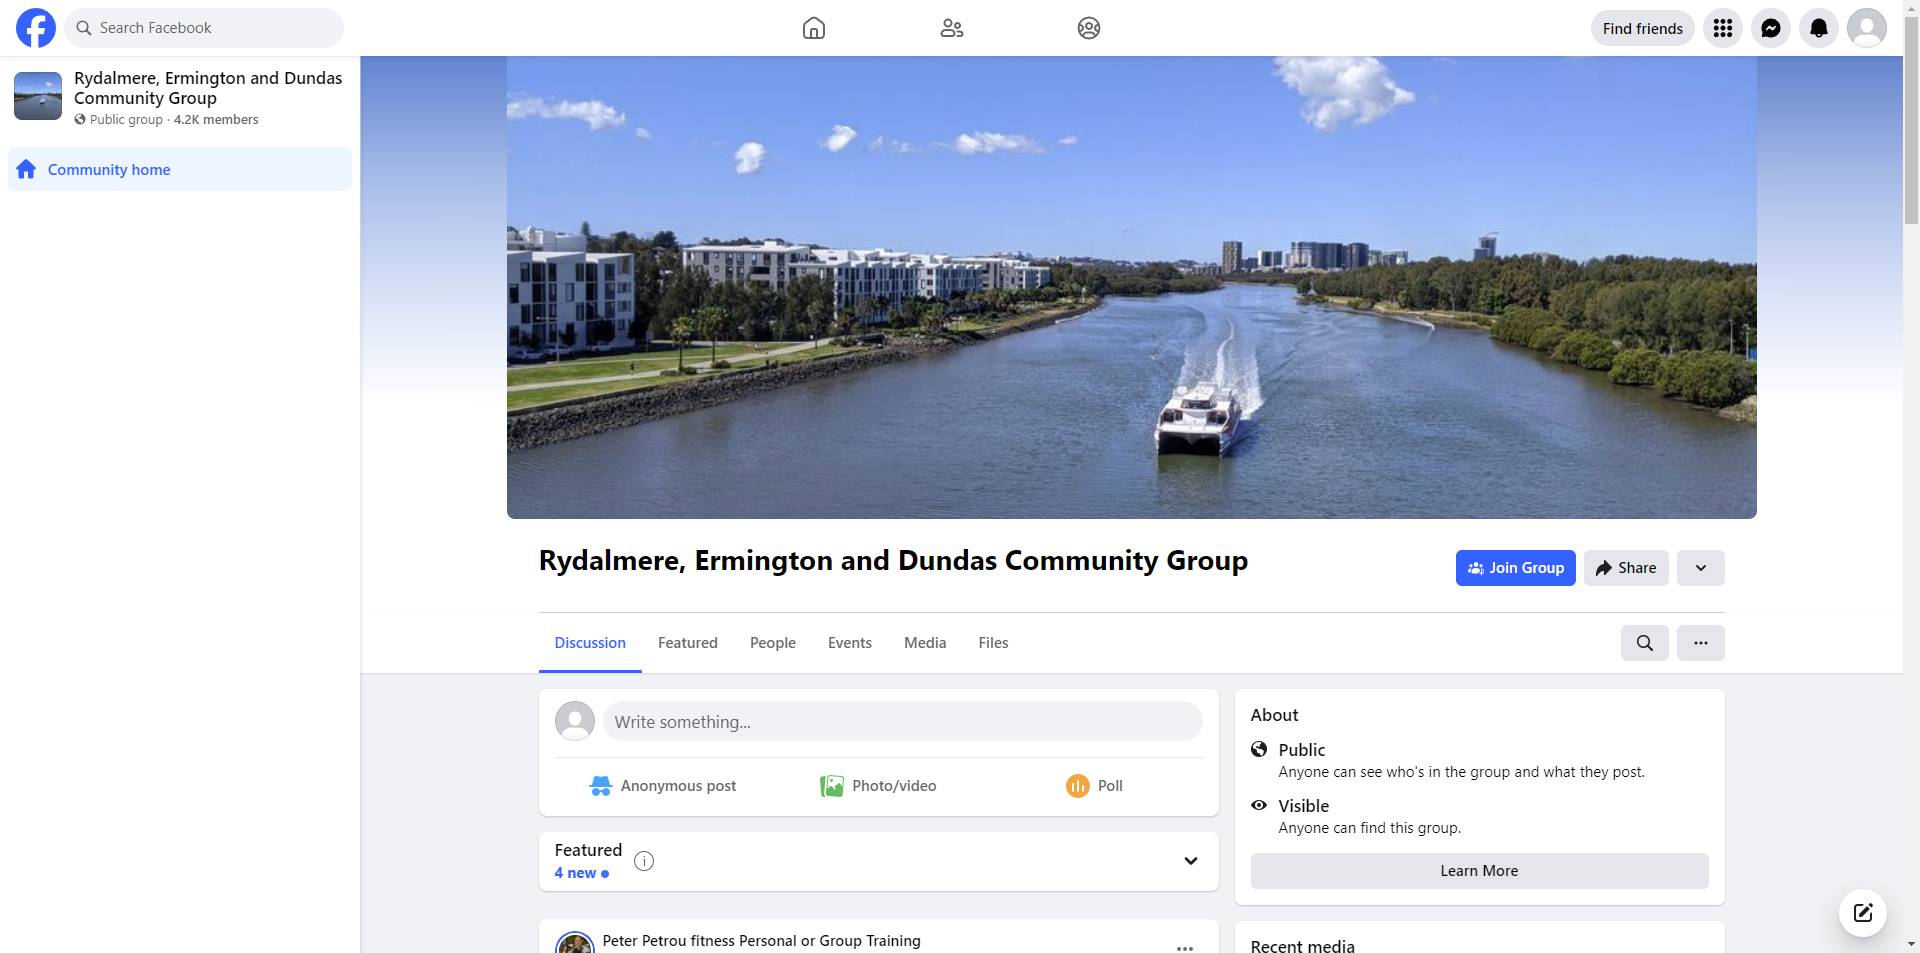 Rydalmere, Ermington and Dundas Community Group